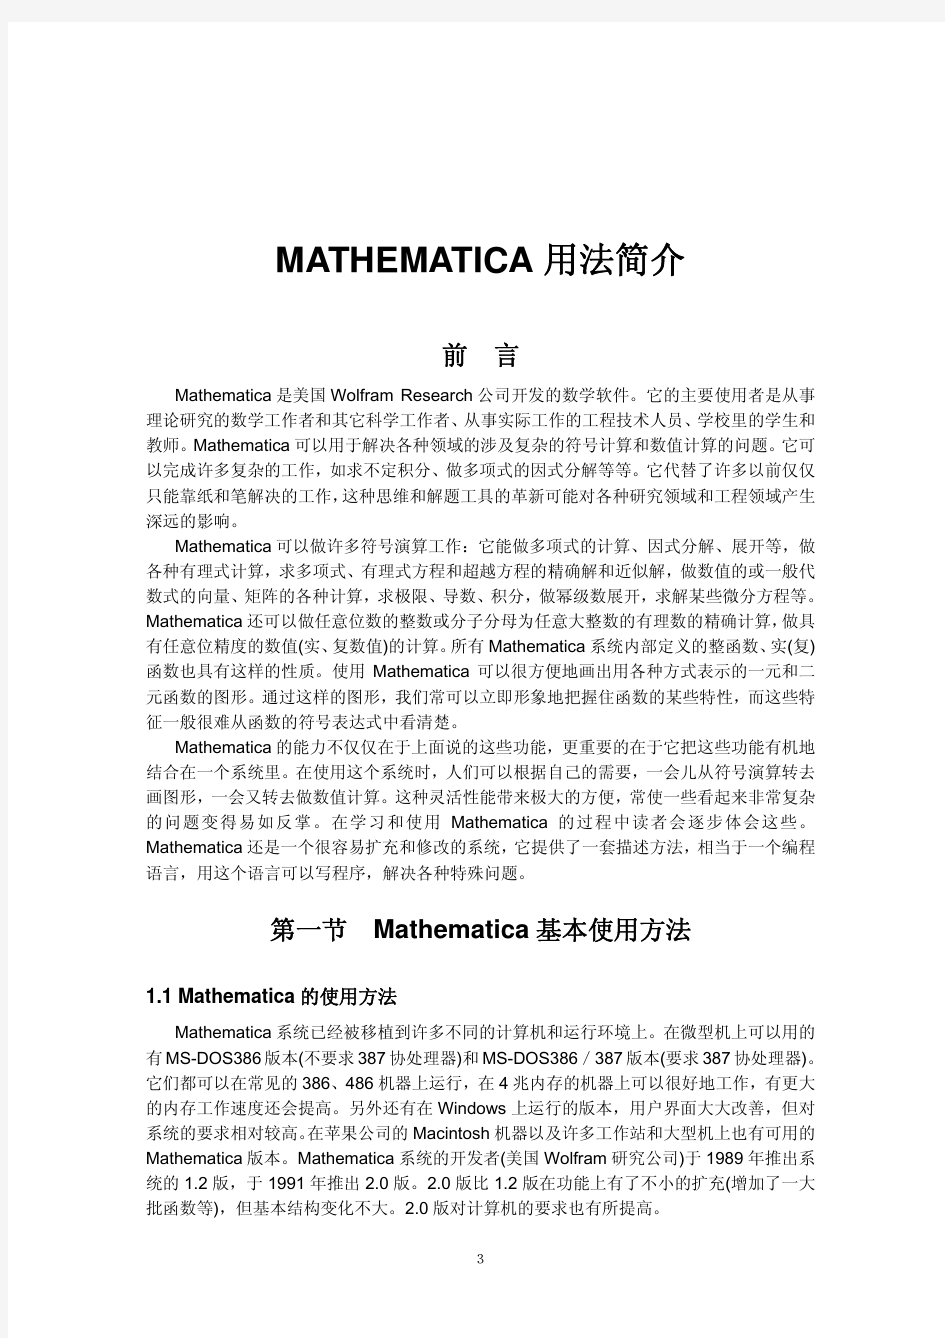 Mathematica_intro